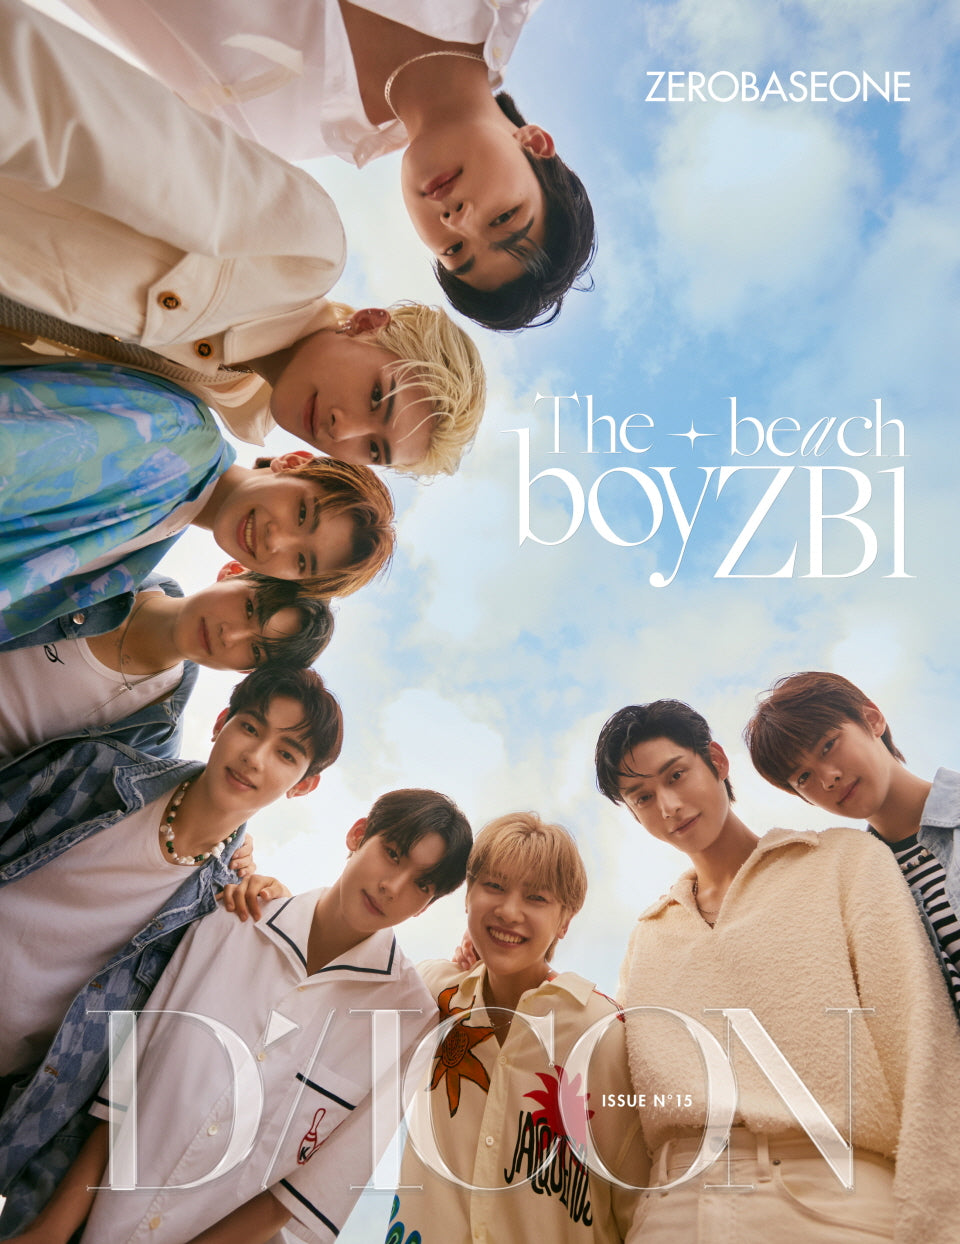 ZEROBASEONE - DICON VOLUME N°15 'The beach boy ZB1' (Group Version 